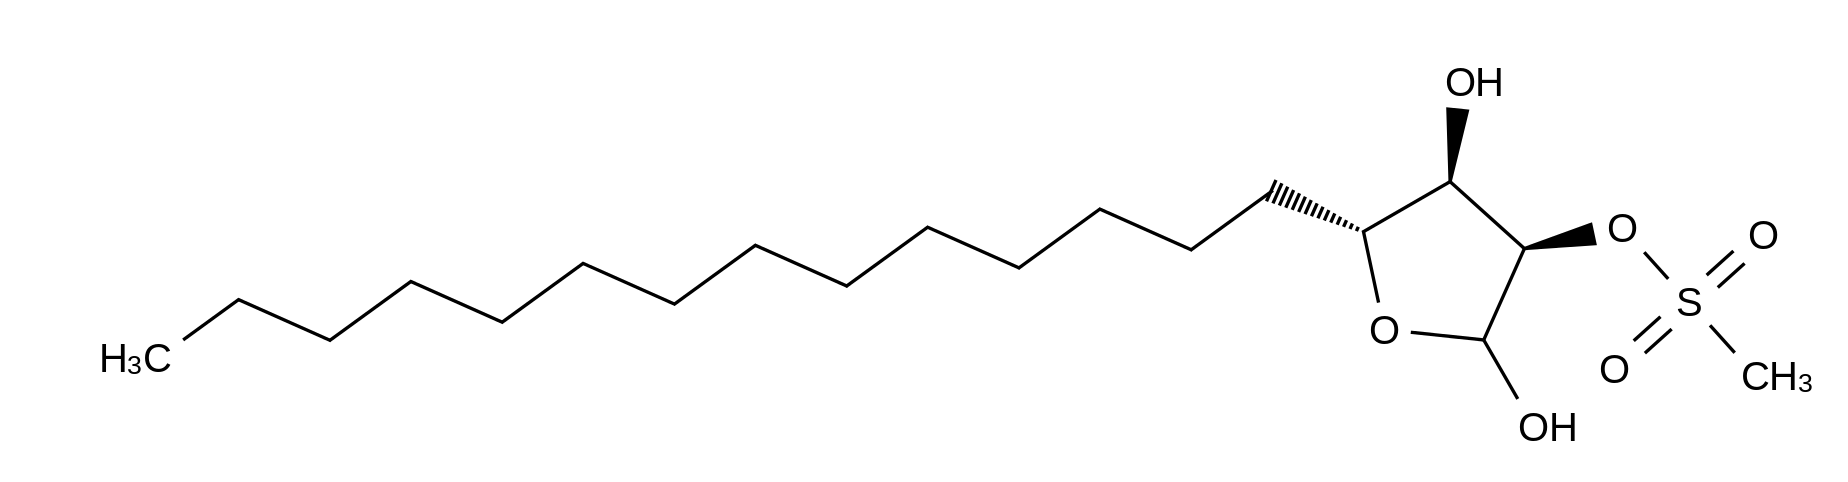 5-Tridecyl-5-deoxy-D-ribofuranose 2-O-Methanesulfonate